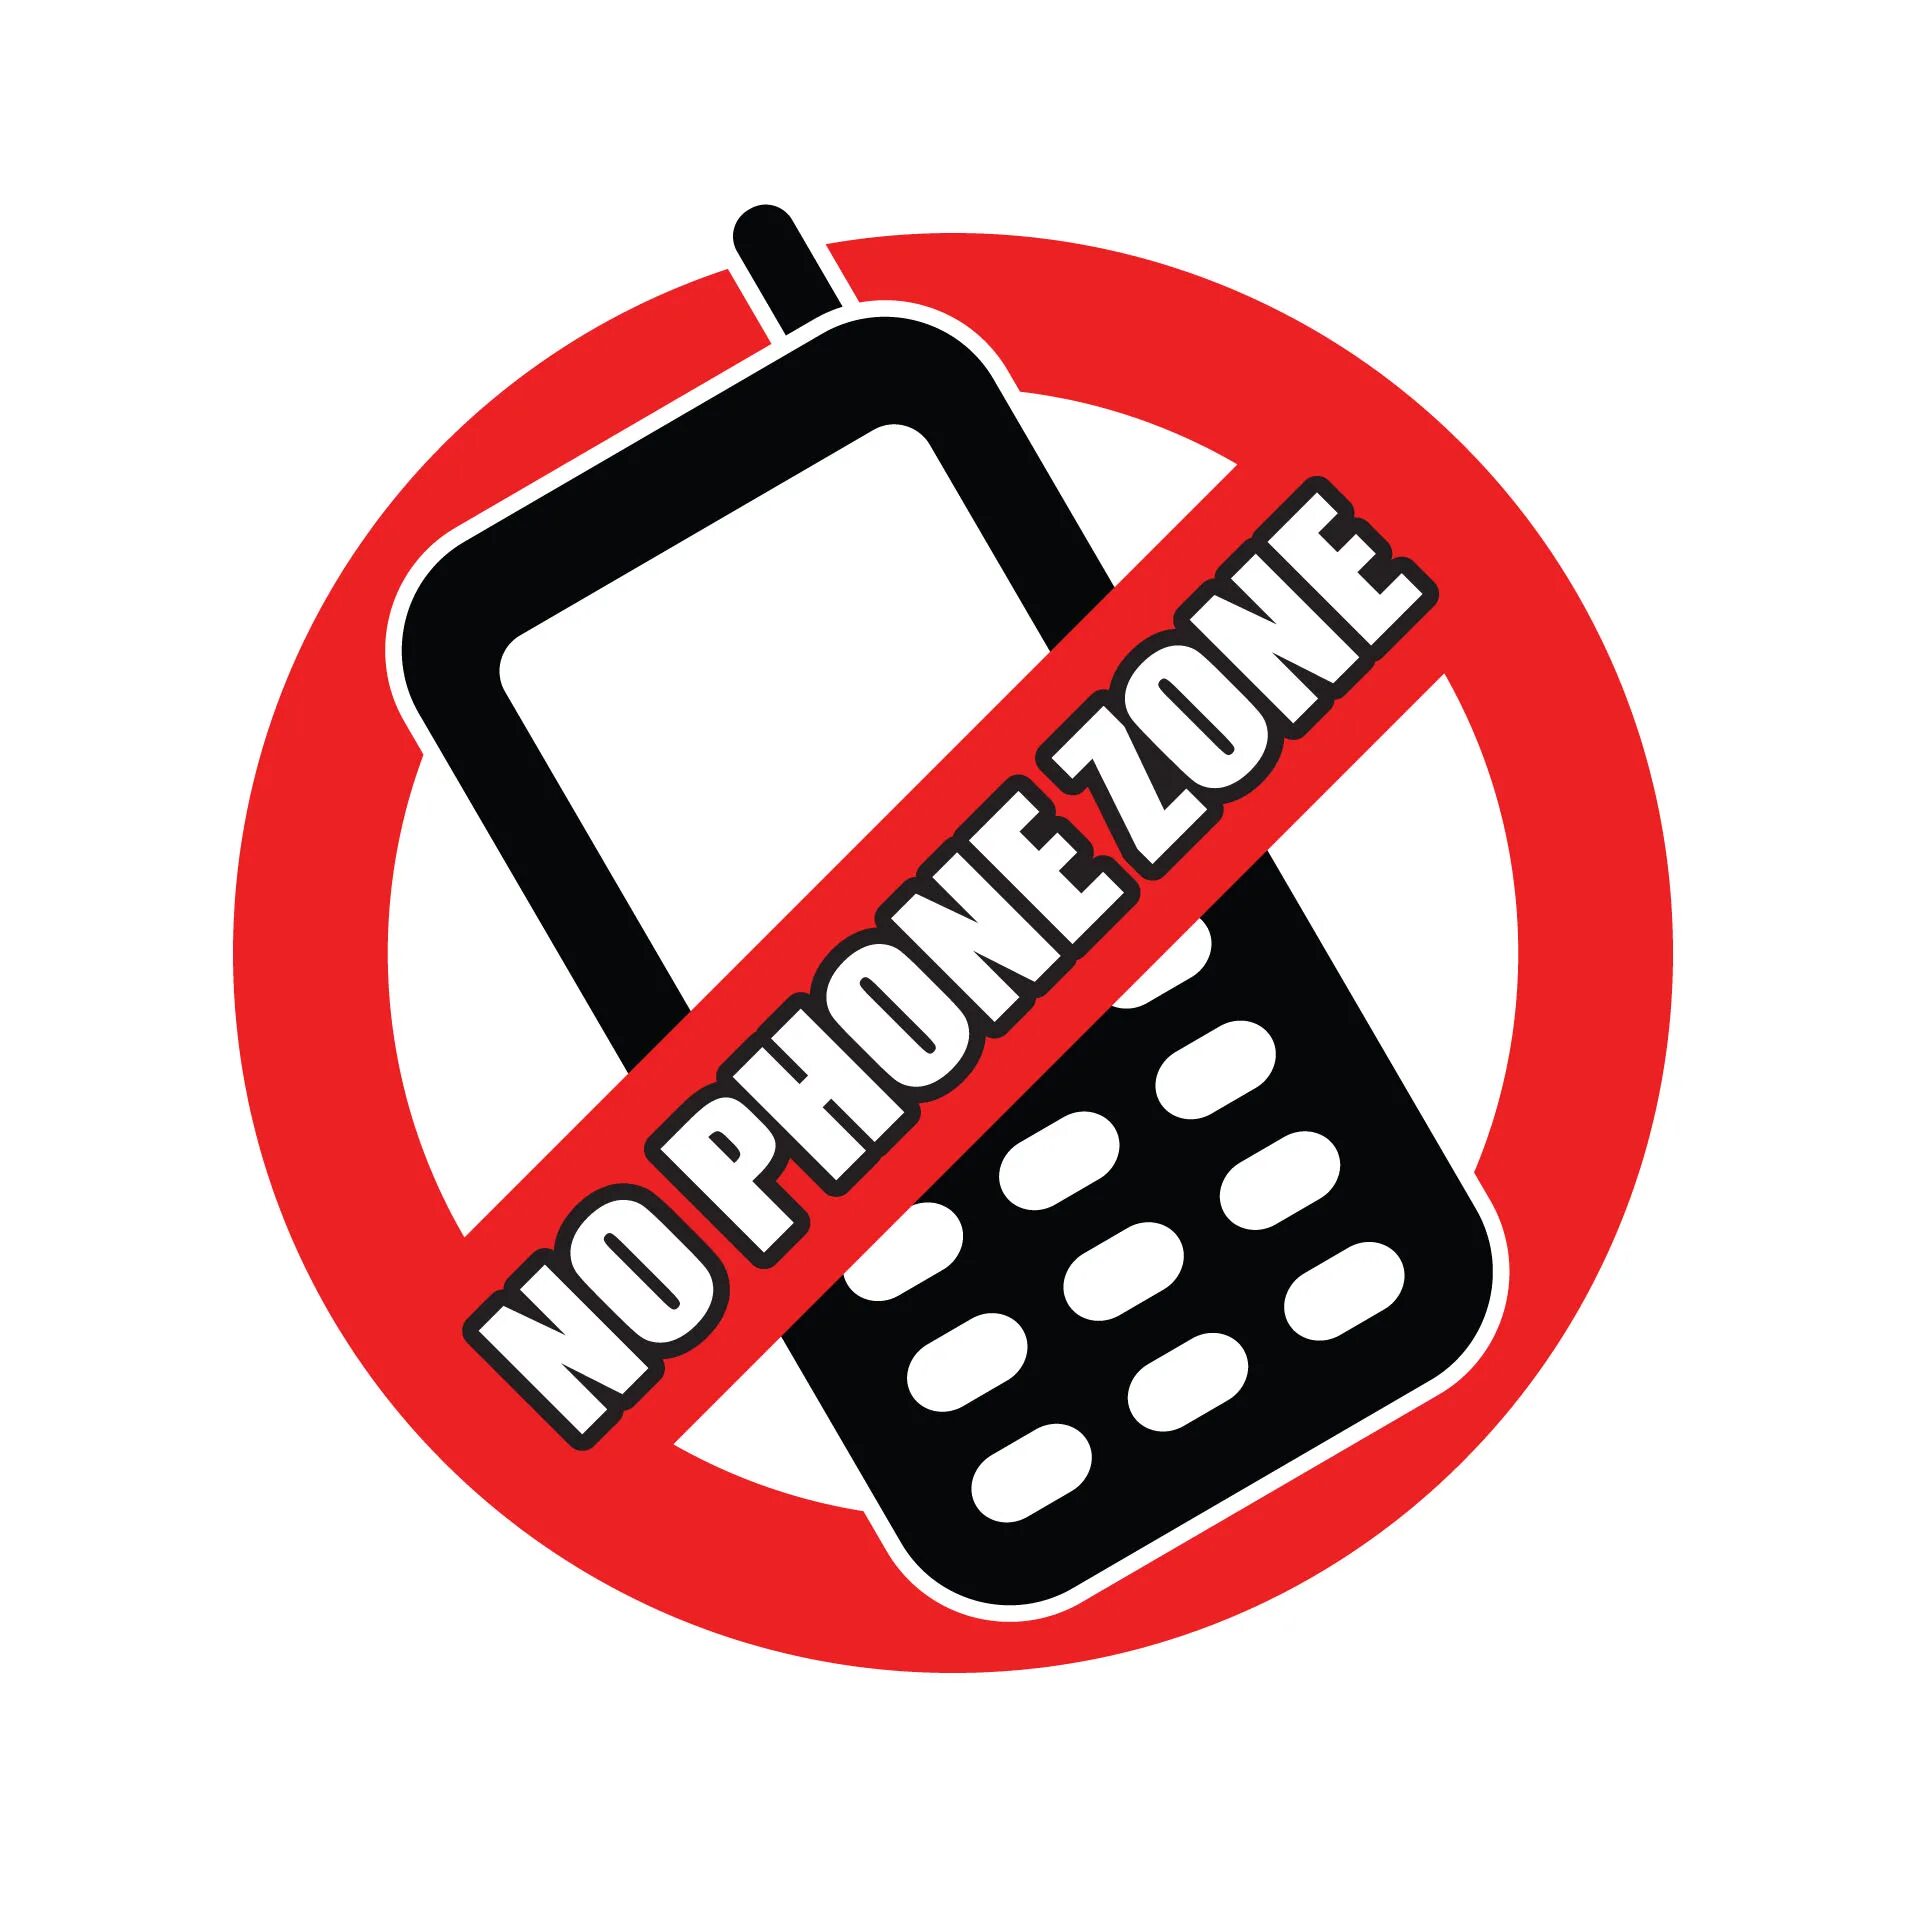 Запрет телефона. Табличка запрет мобильного телефона. Мобильные телефоны запрещены. Нет телефону. Запрещать мобильные телефоны в школах